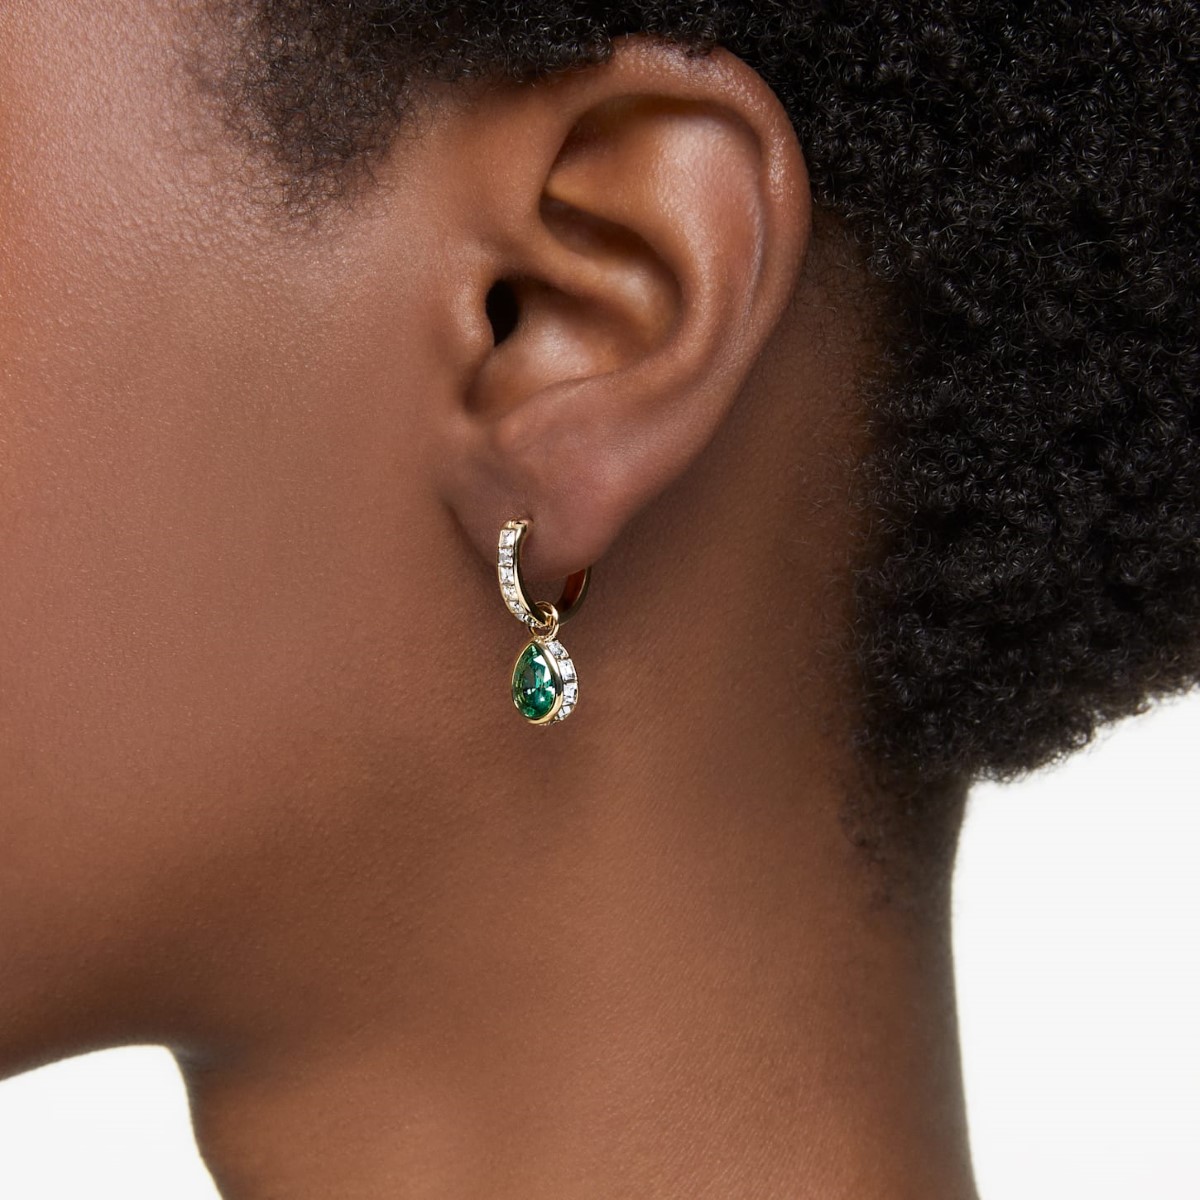 Swarovski Stilla Pear Cut Drop Earrings - Green with Gold Tone Plating 5662922